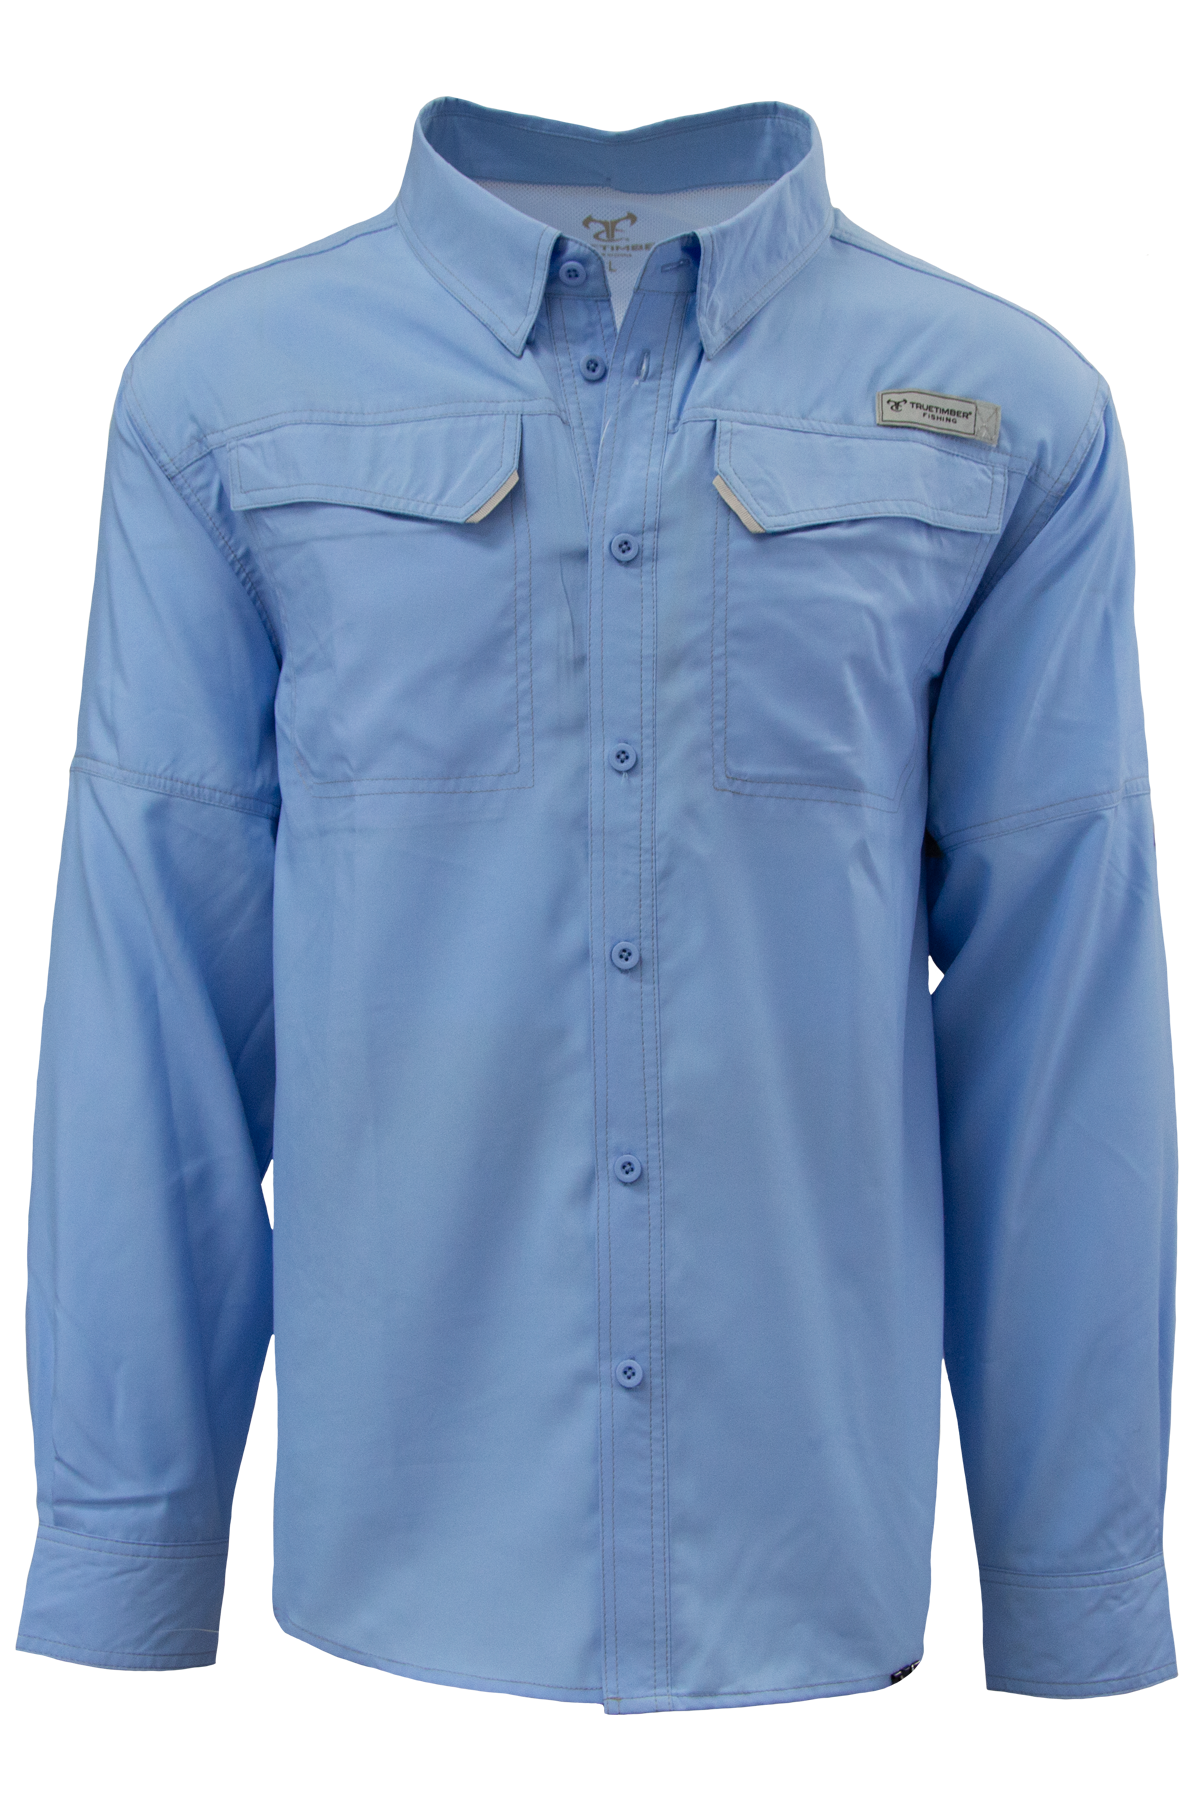 BakStaye LS Shirt-Vapor Blue / Drizzle